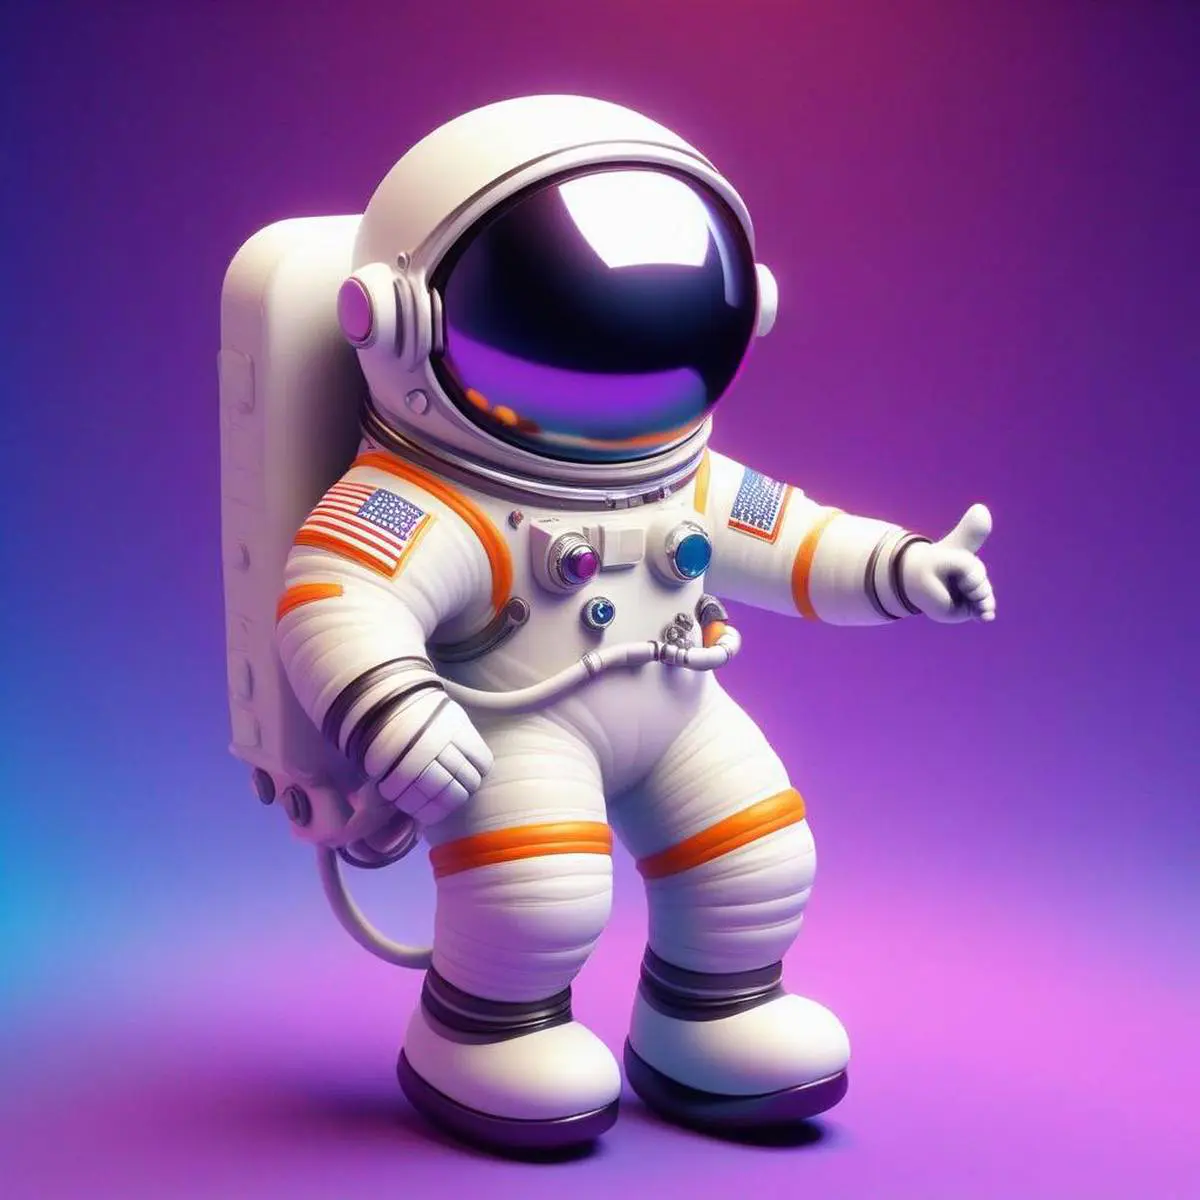 Astronaut puns